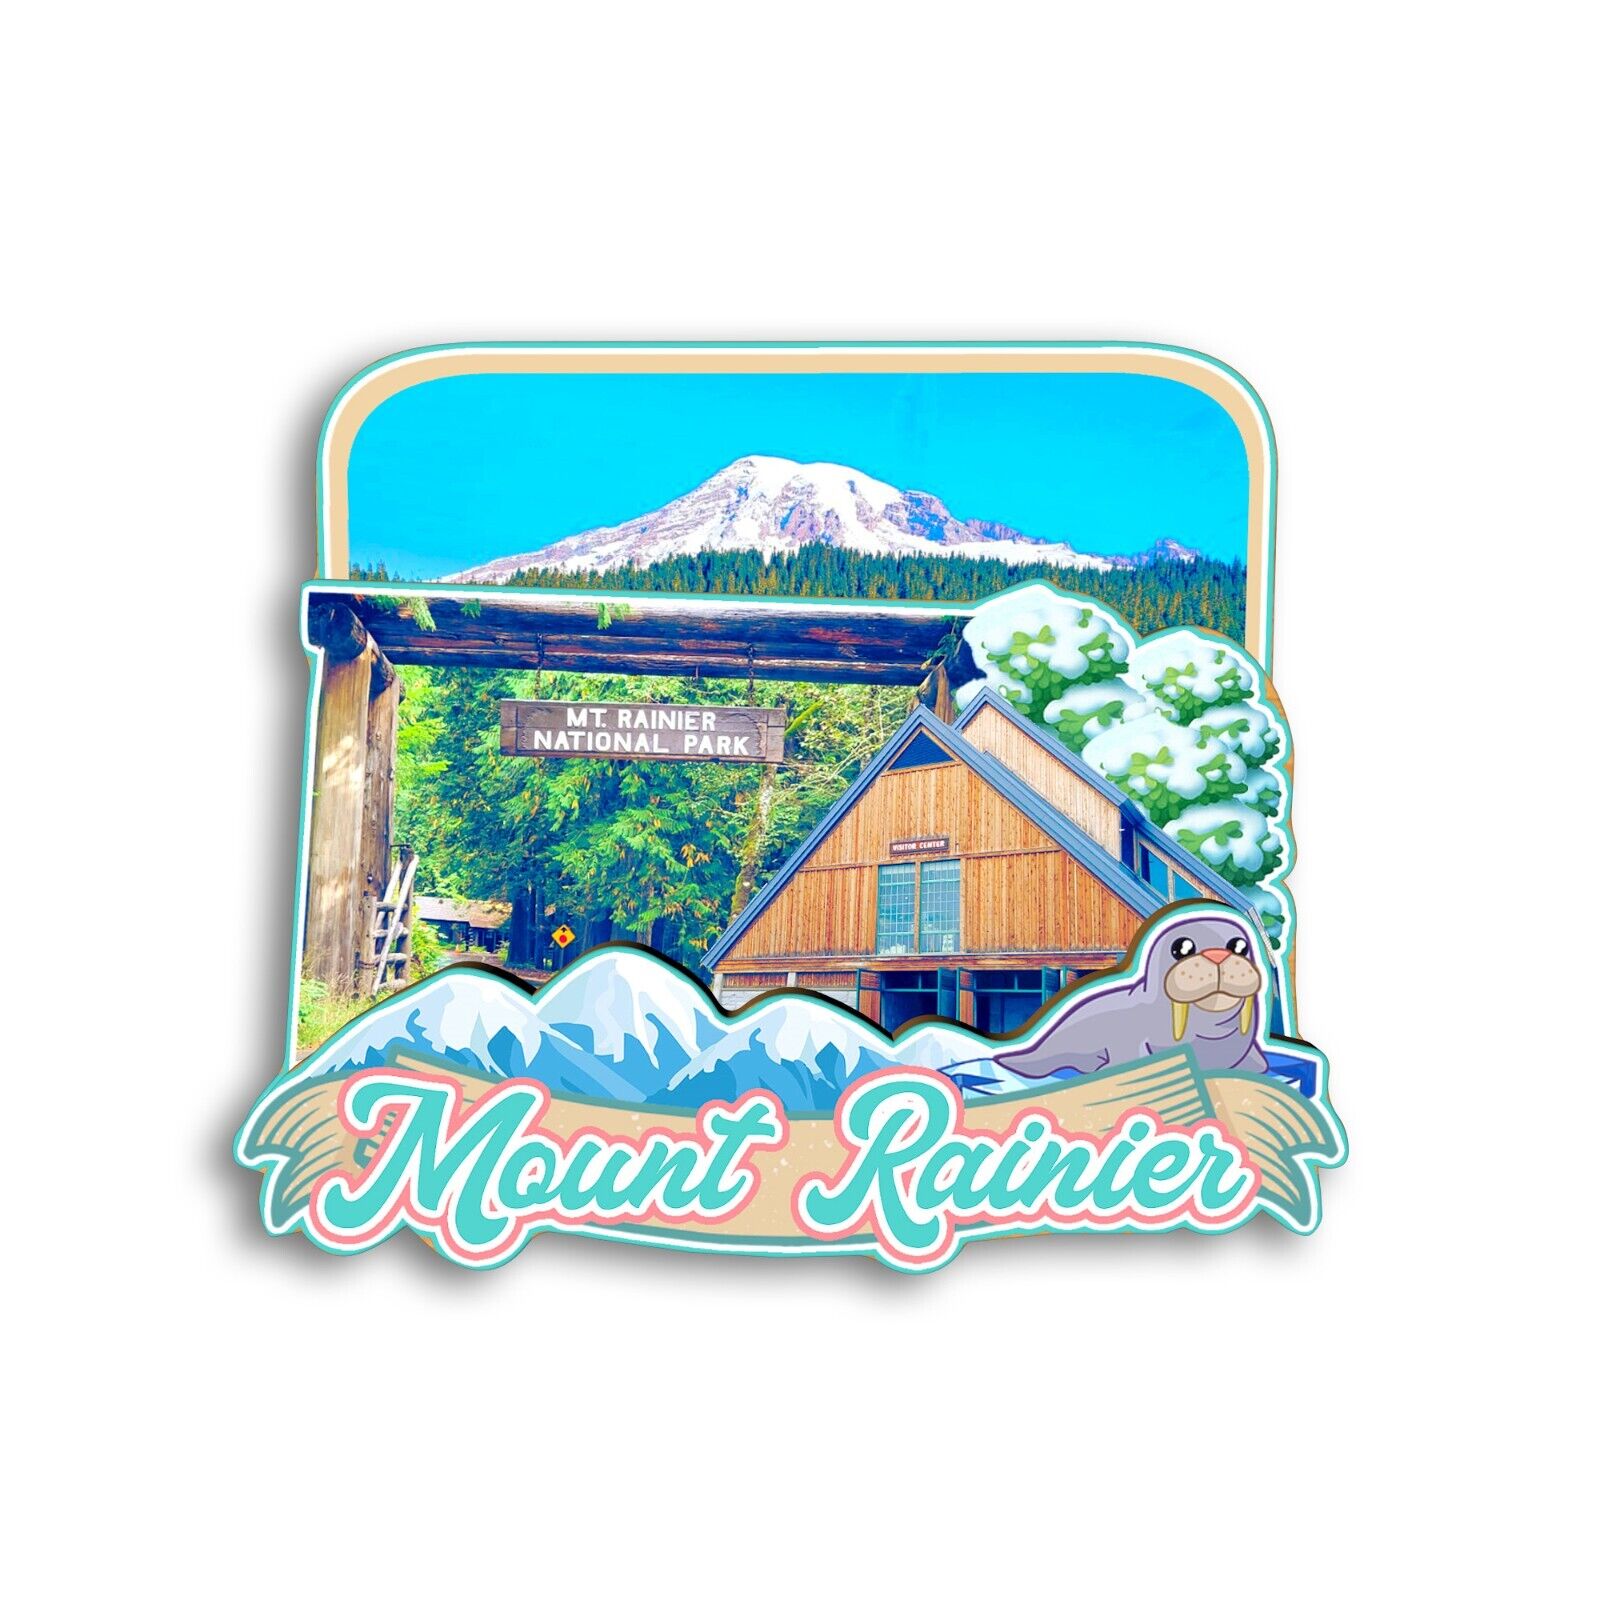 Mount Rainier National Park USA Refrigerator magnet 3D travel souvenirs wood